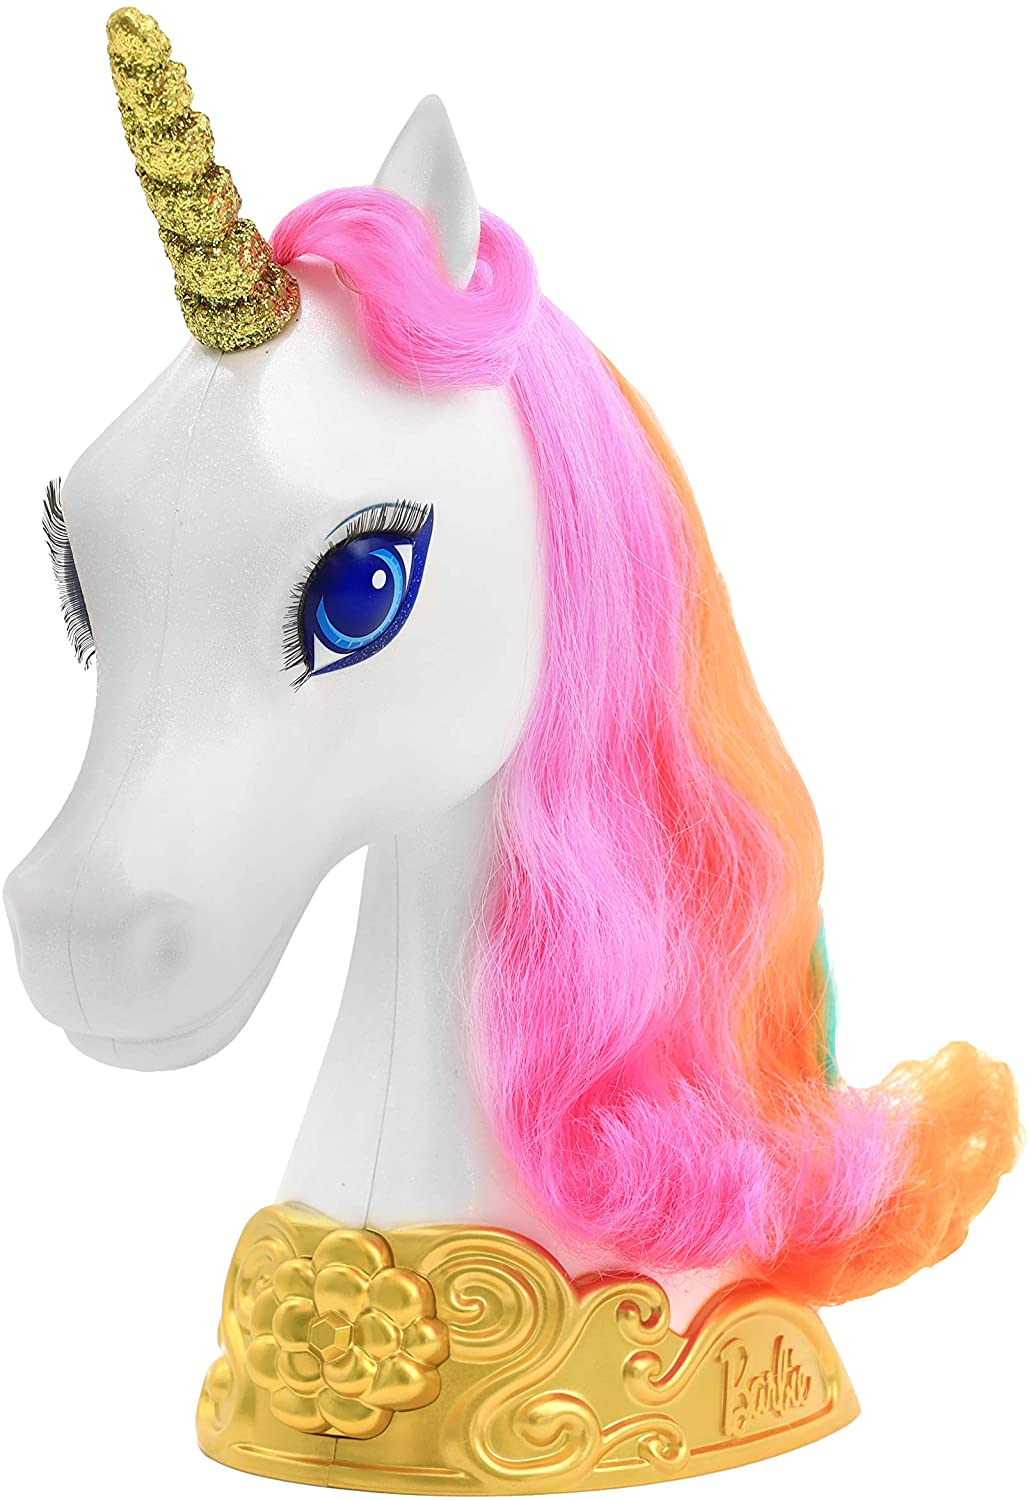 Barbie Dreamtopia Unicorn Styling Head, 10-Pieces